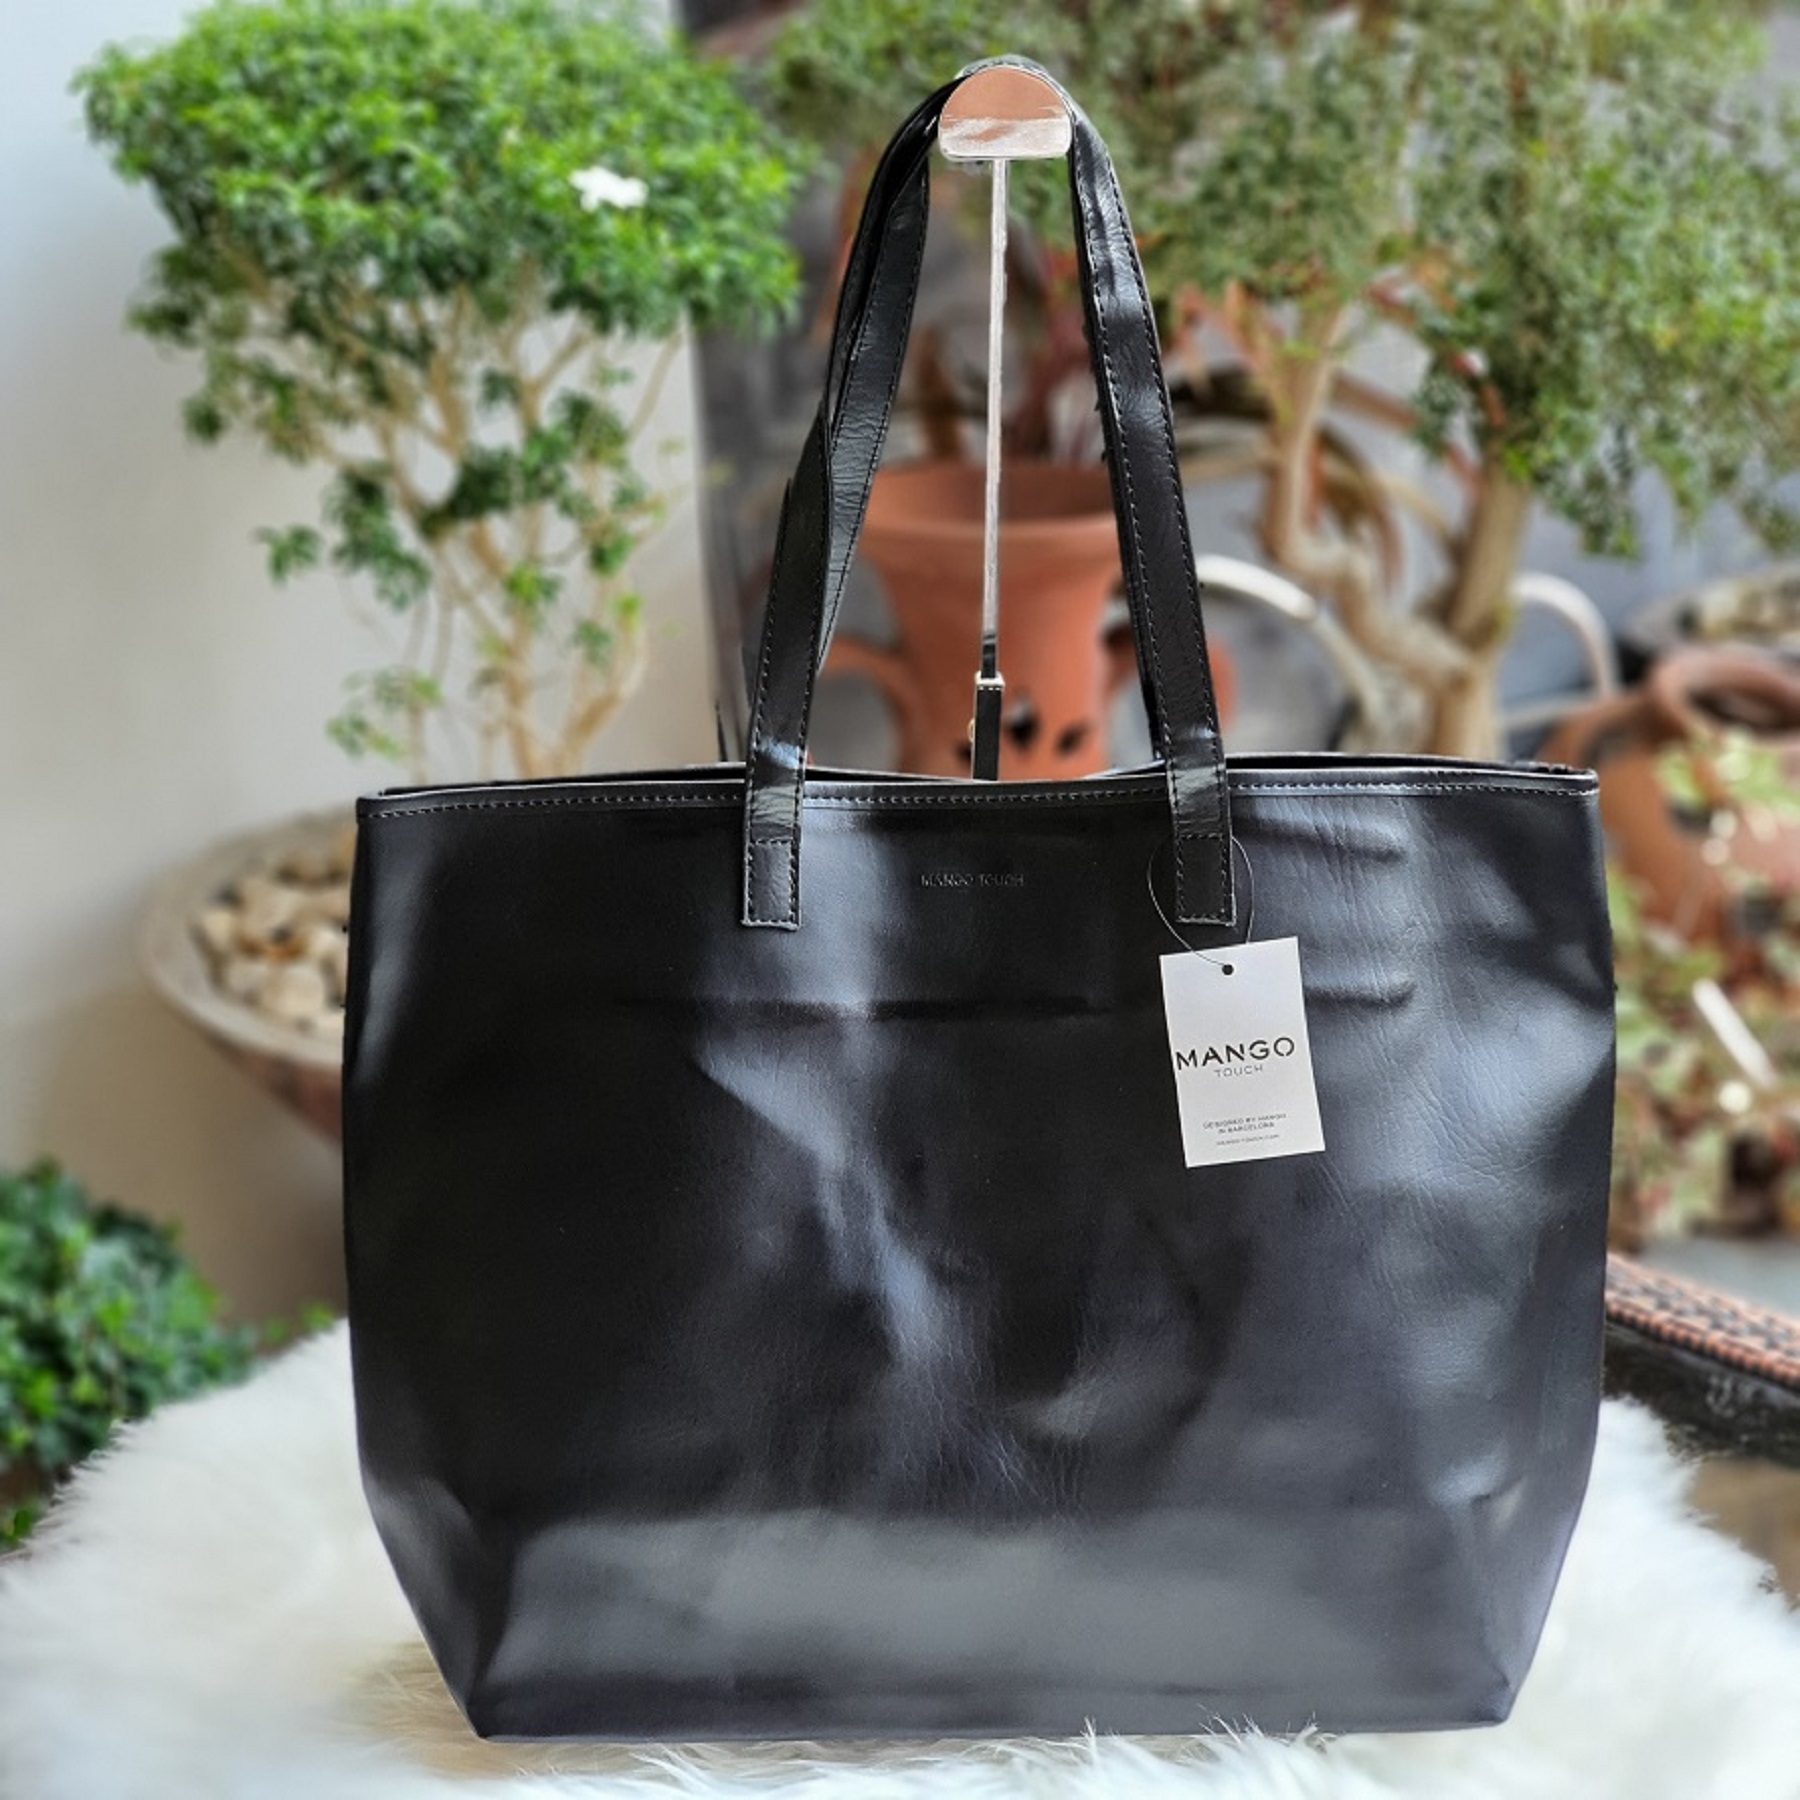 Buy Black Handbags for Women by Lacoste Online | Ajio.com